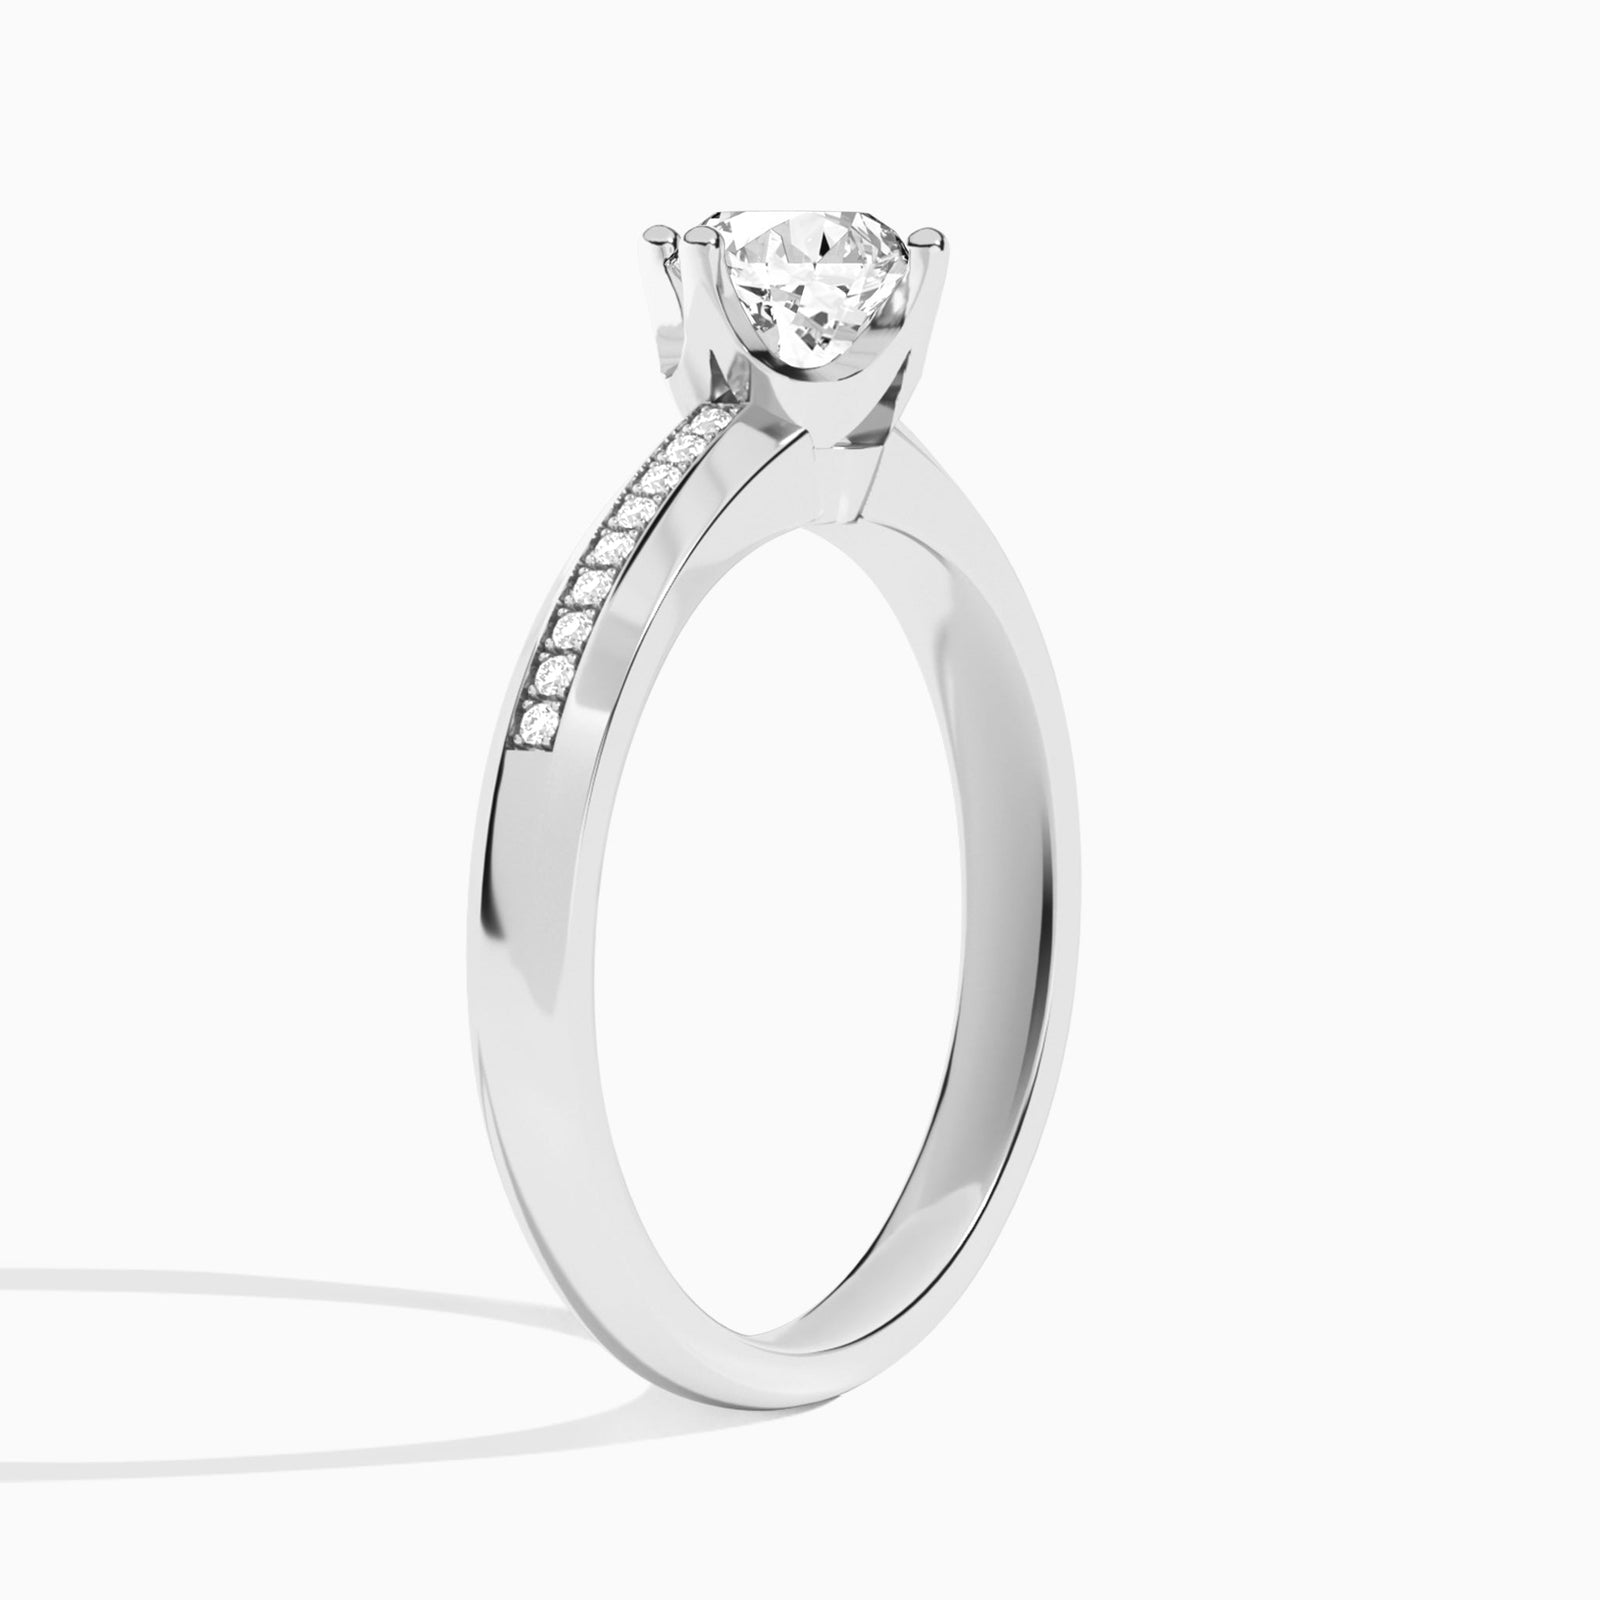 Petite Adorned Classic Four-Prong Diamond Engagement Ring